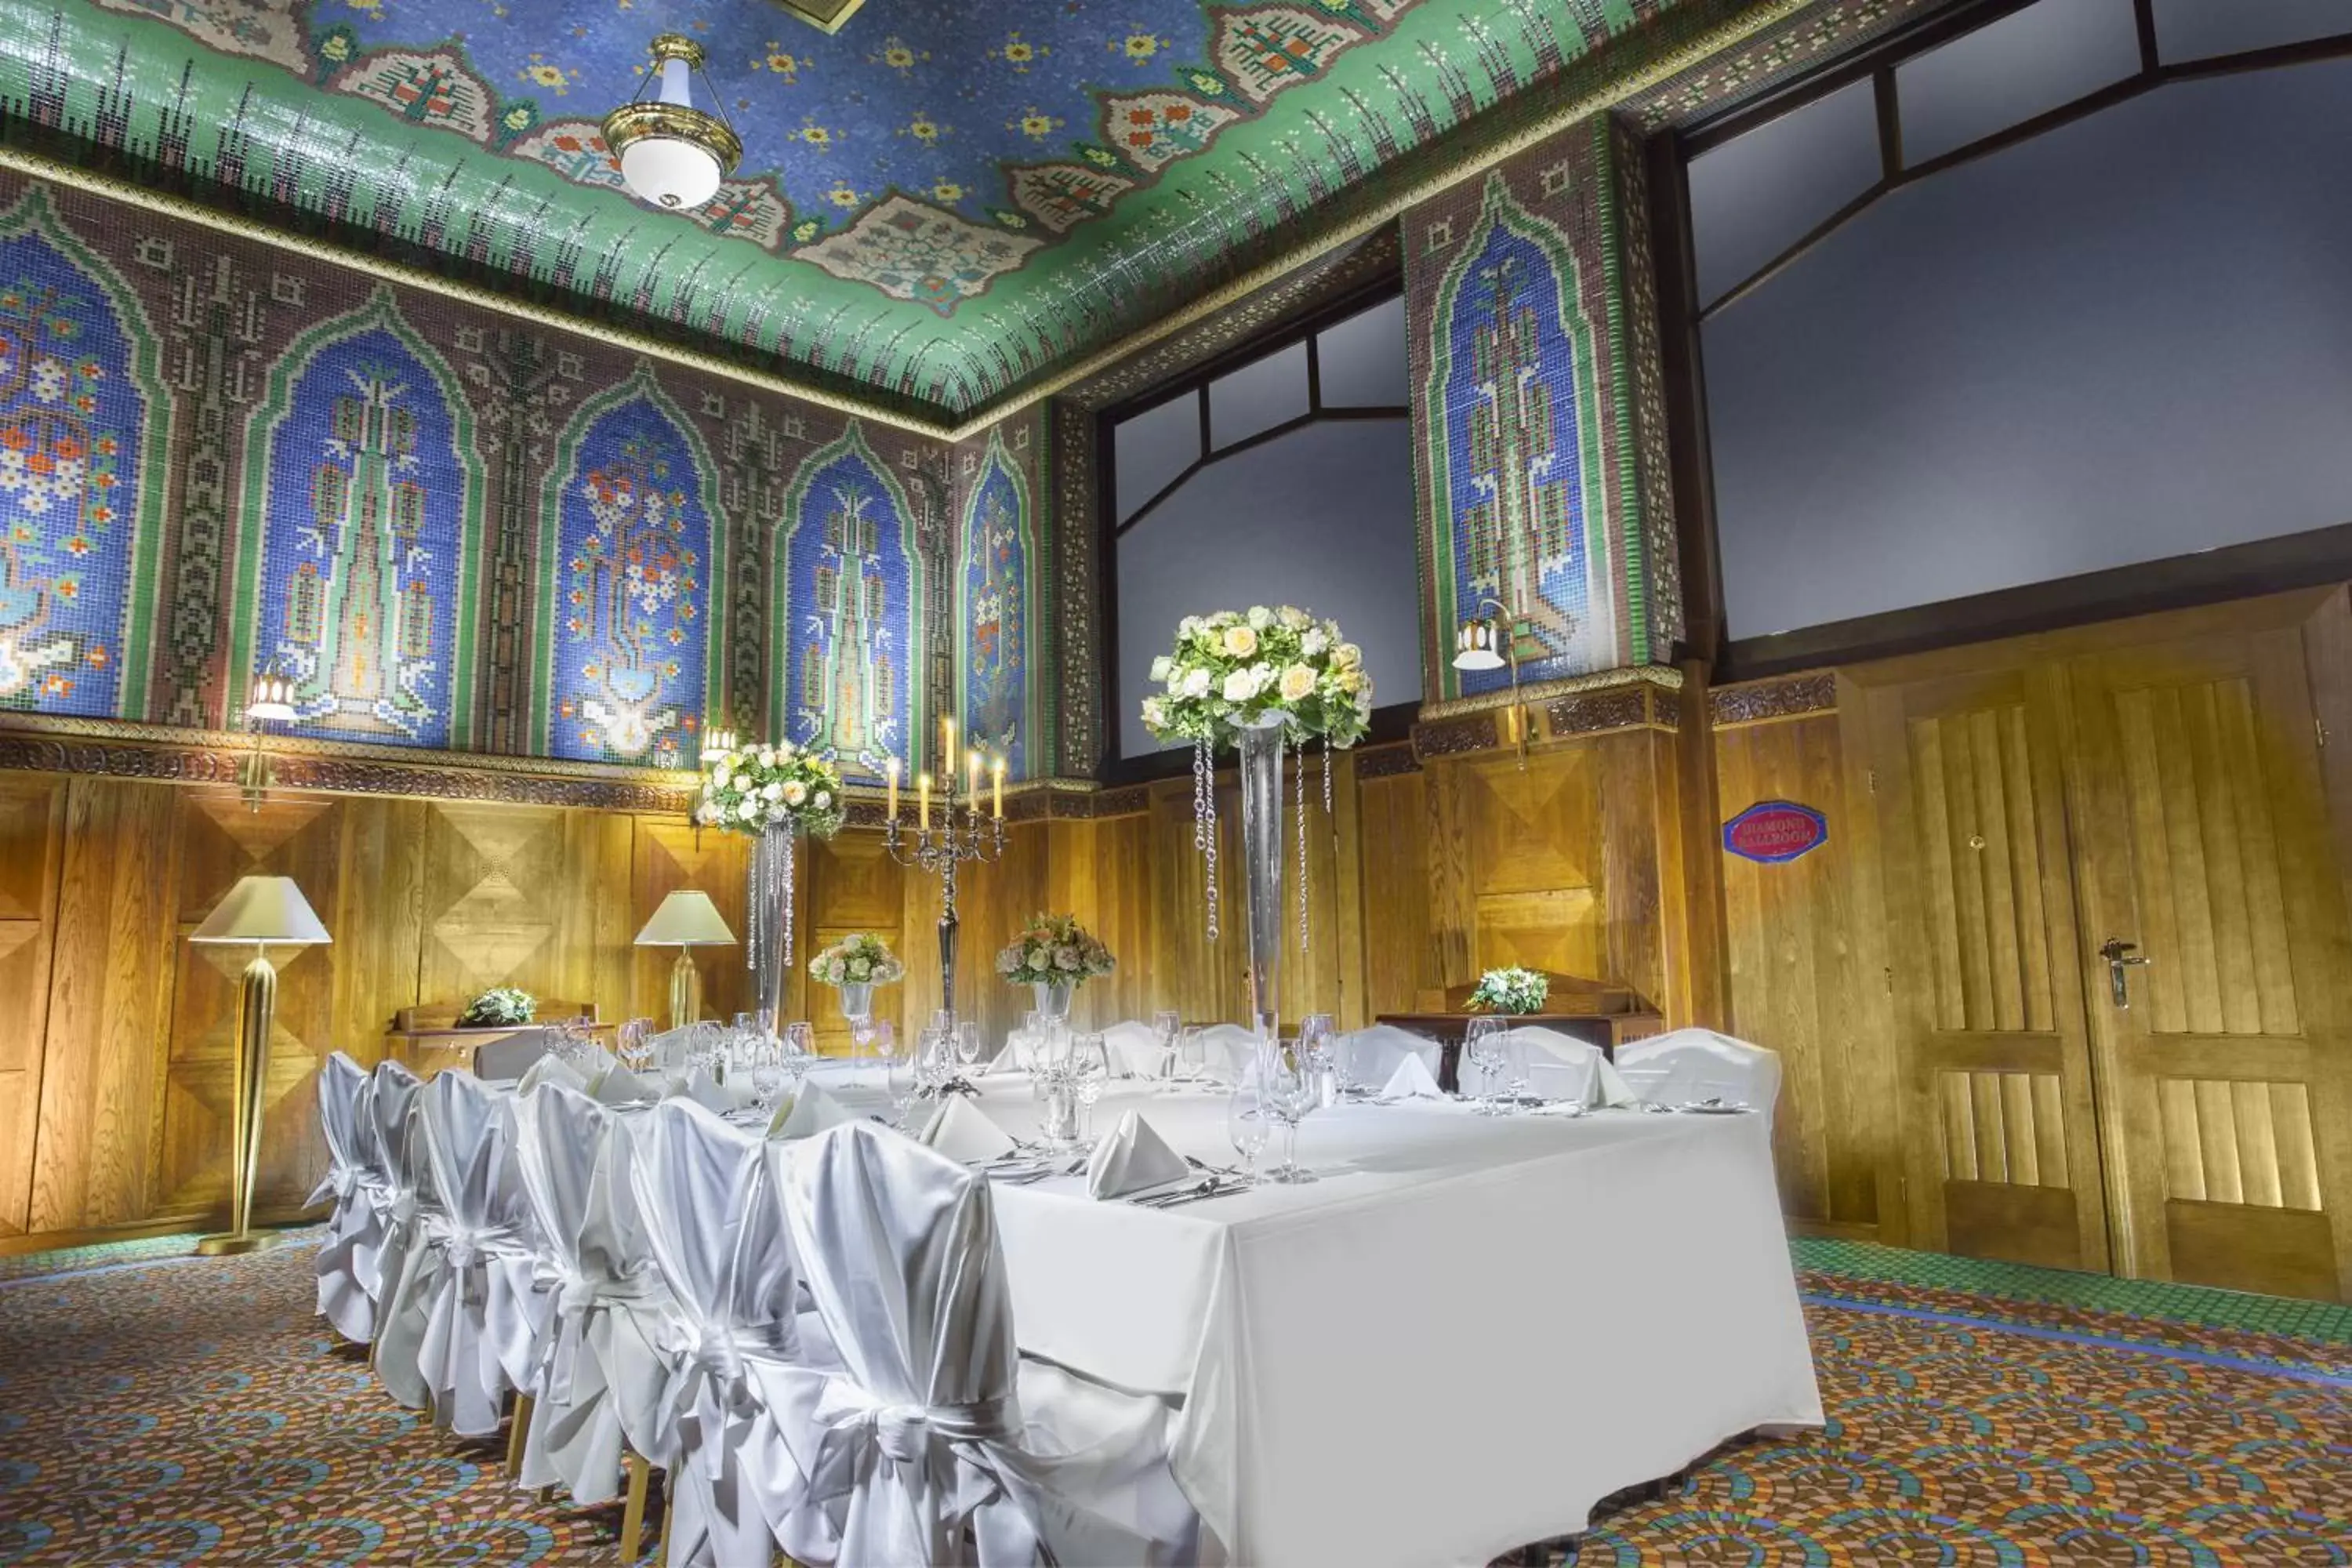 Banquet/Function facilities, Banquet Facilities in Art Deco Imperial Hotel